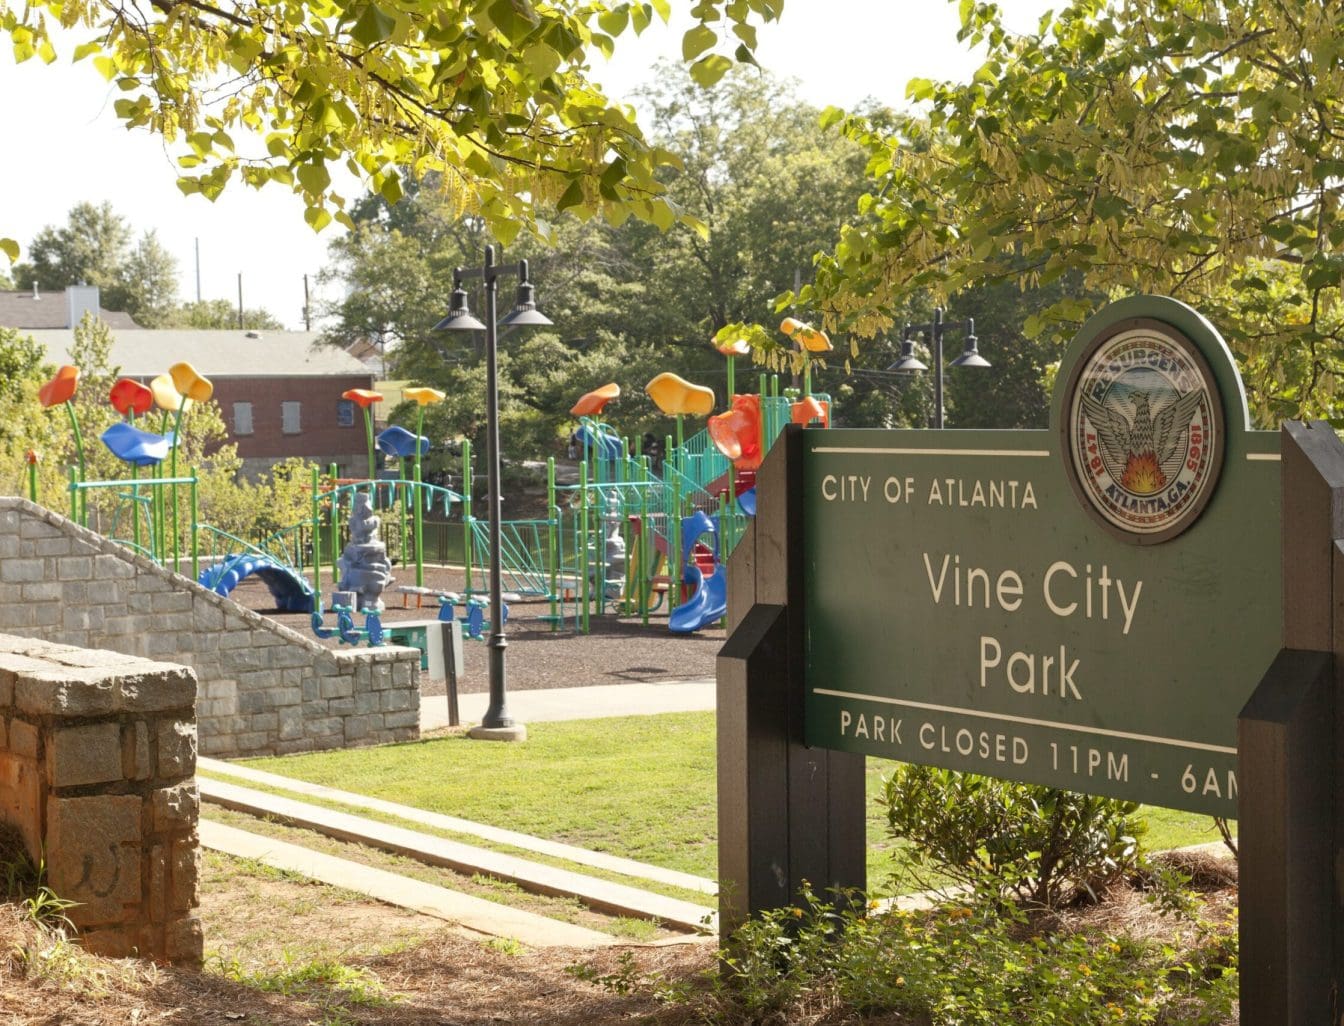 Vine City Park